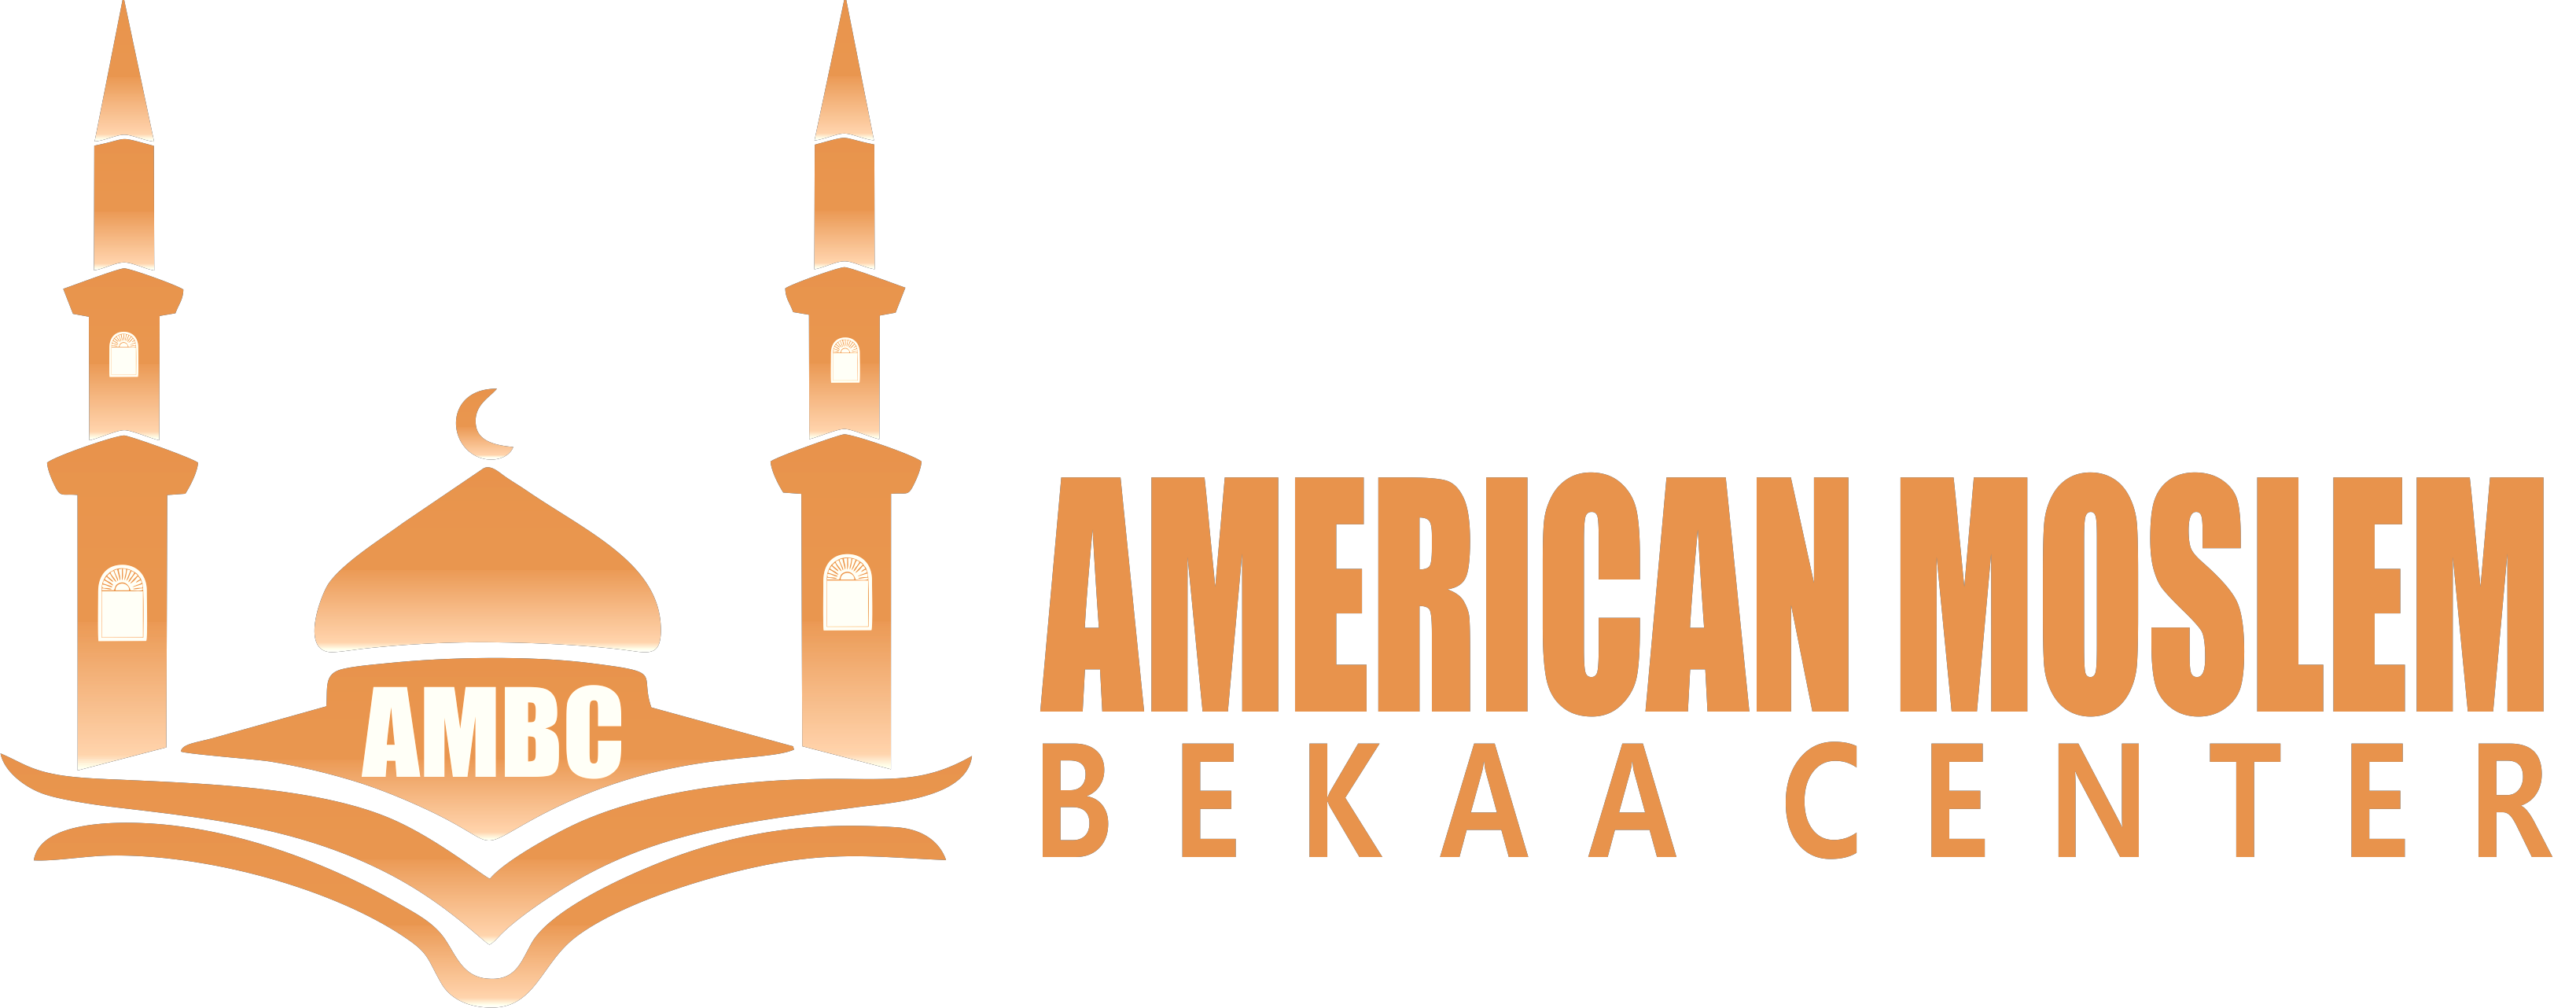 American Moslem Bekaa Center